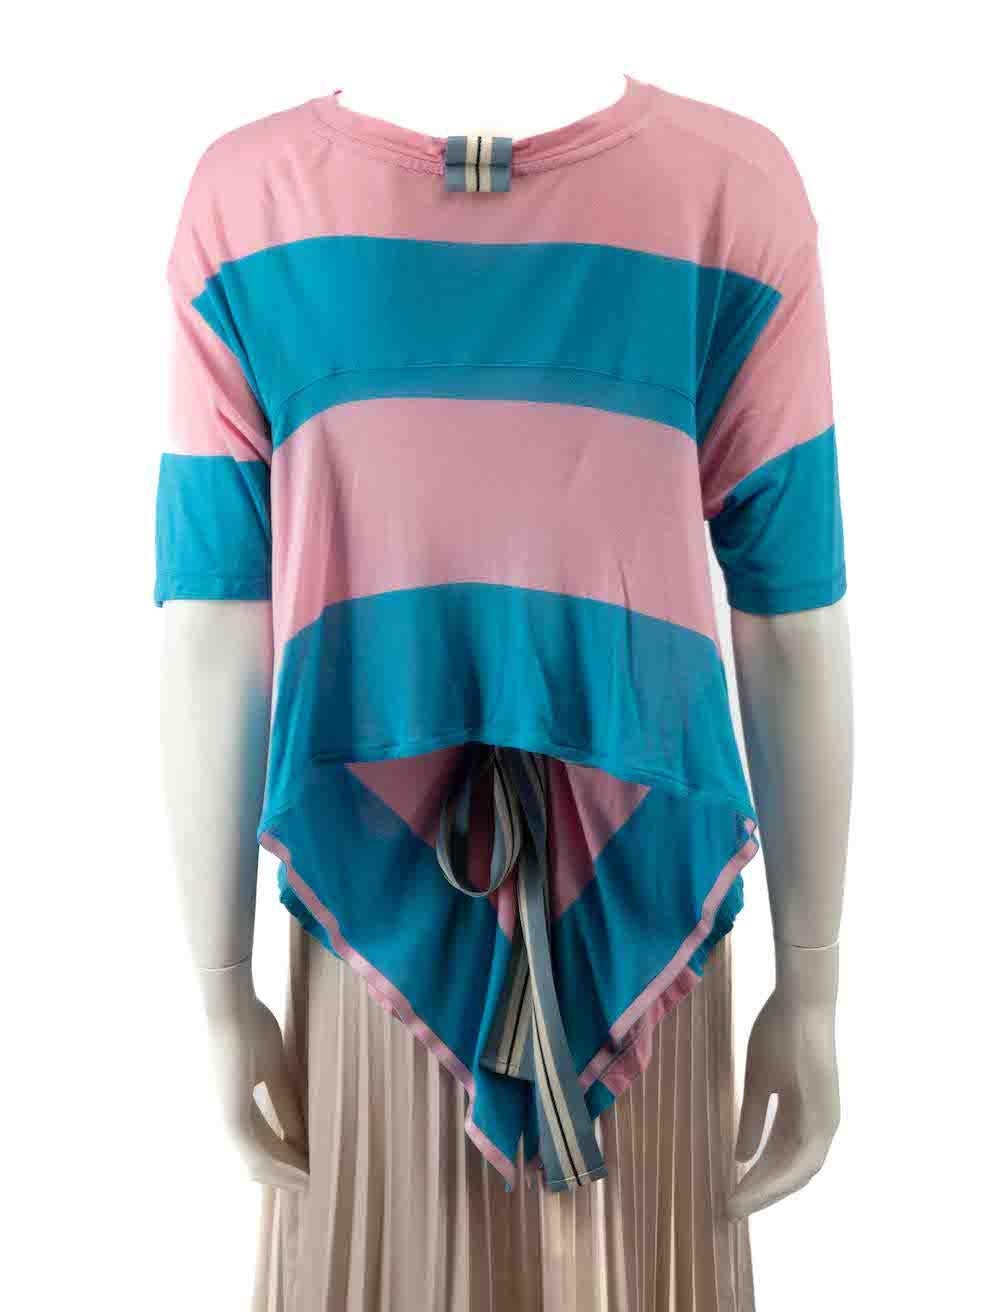 Diane Von Furstenberg Blue & Pink Striped Top Size L In Good Condition For Sale In London, GB